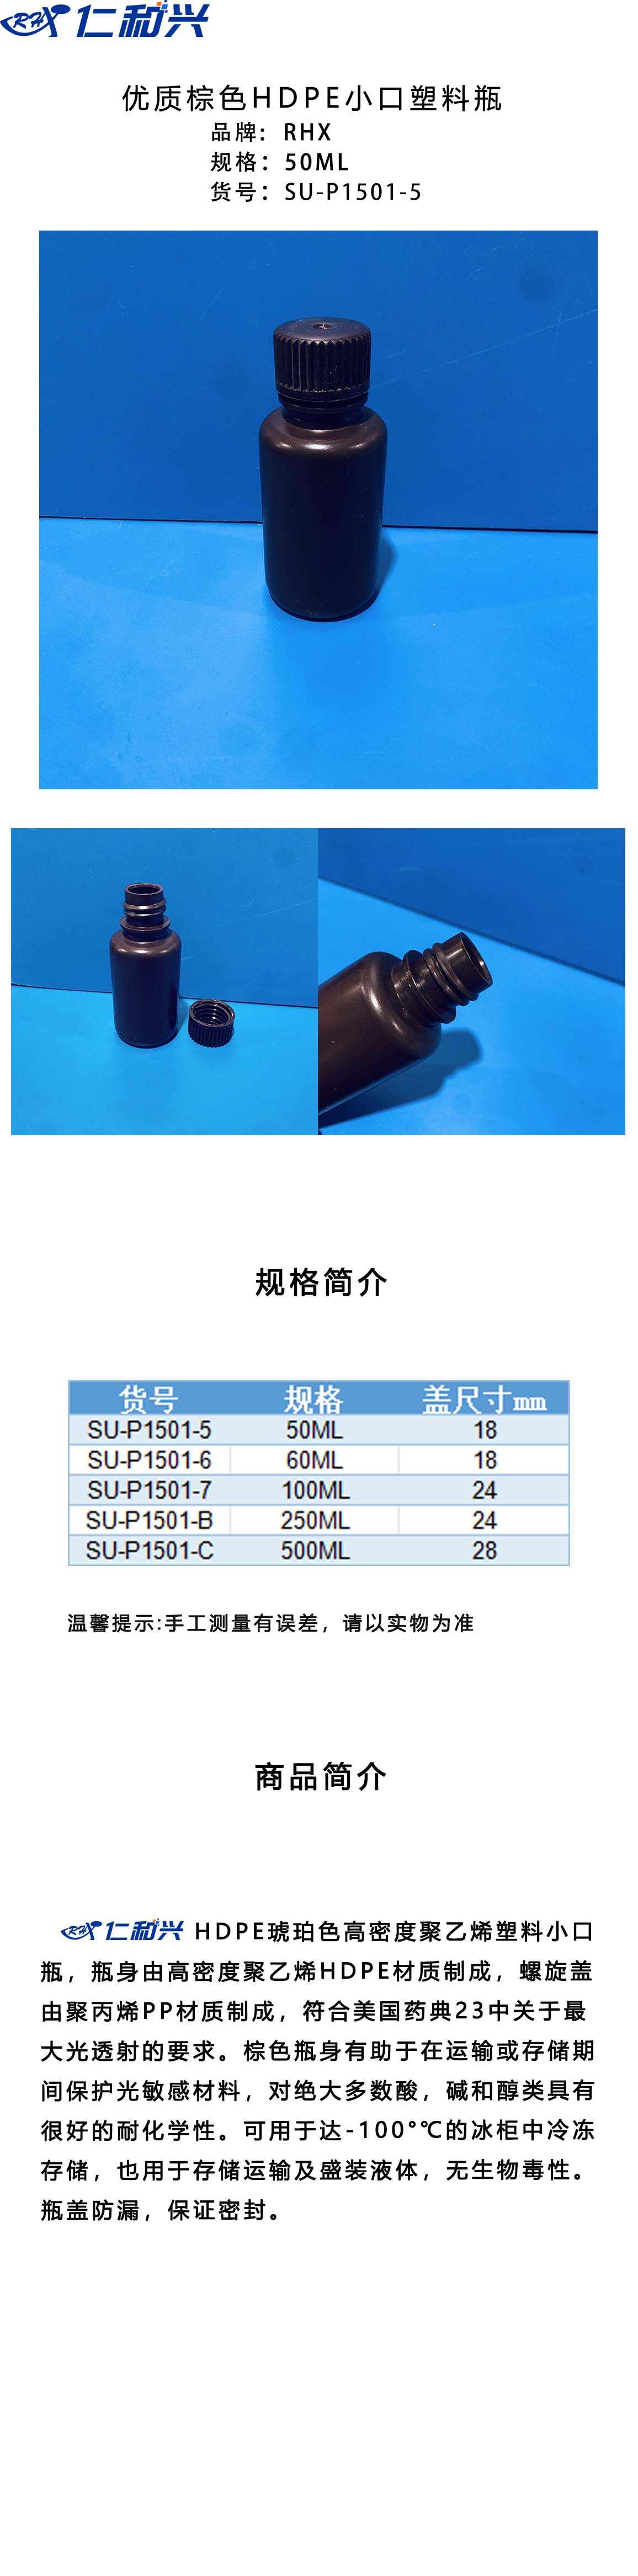 SU-P1501-5 棕色HDPE 小口塑料瓶 长图模板.jpg